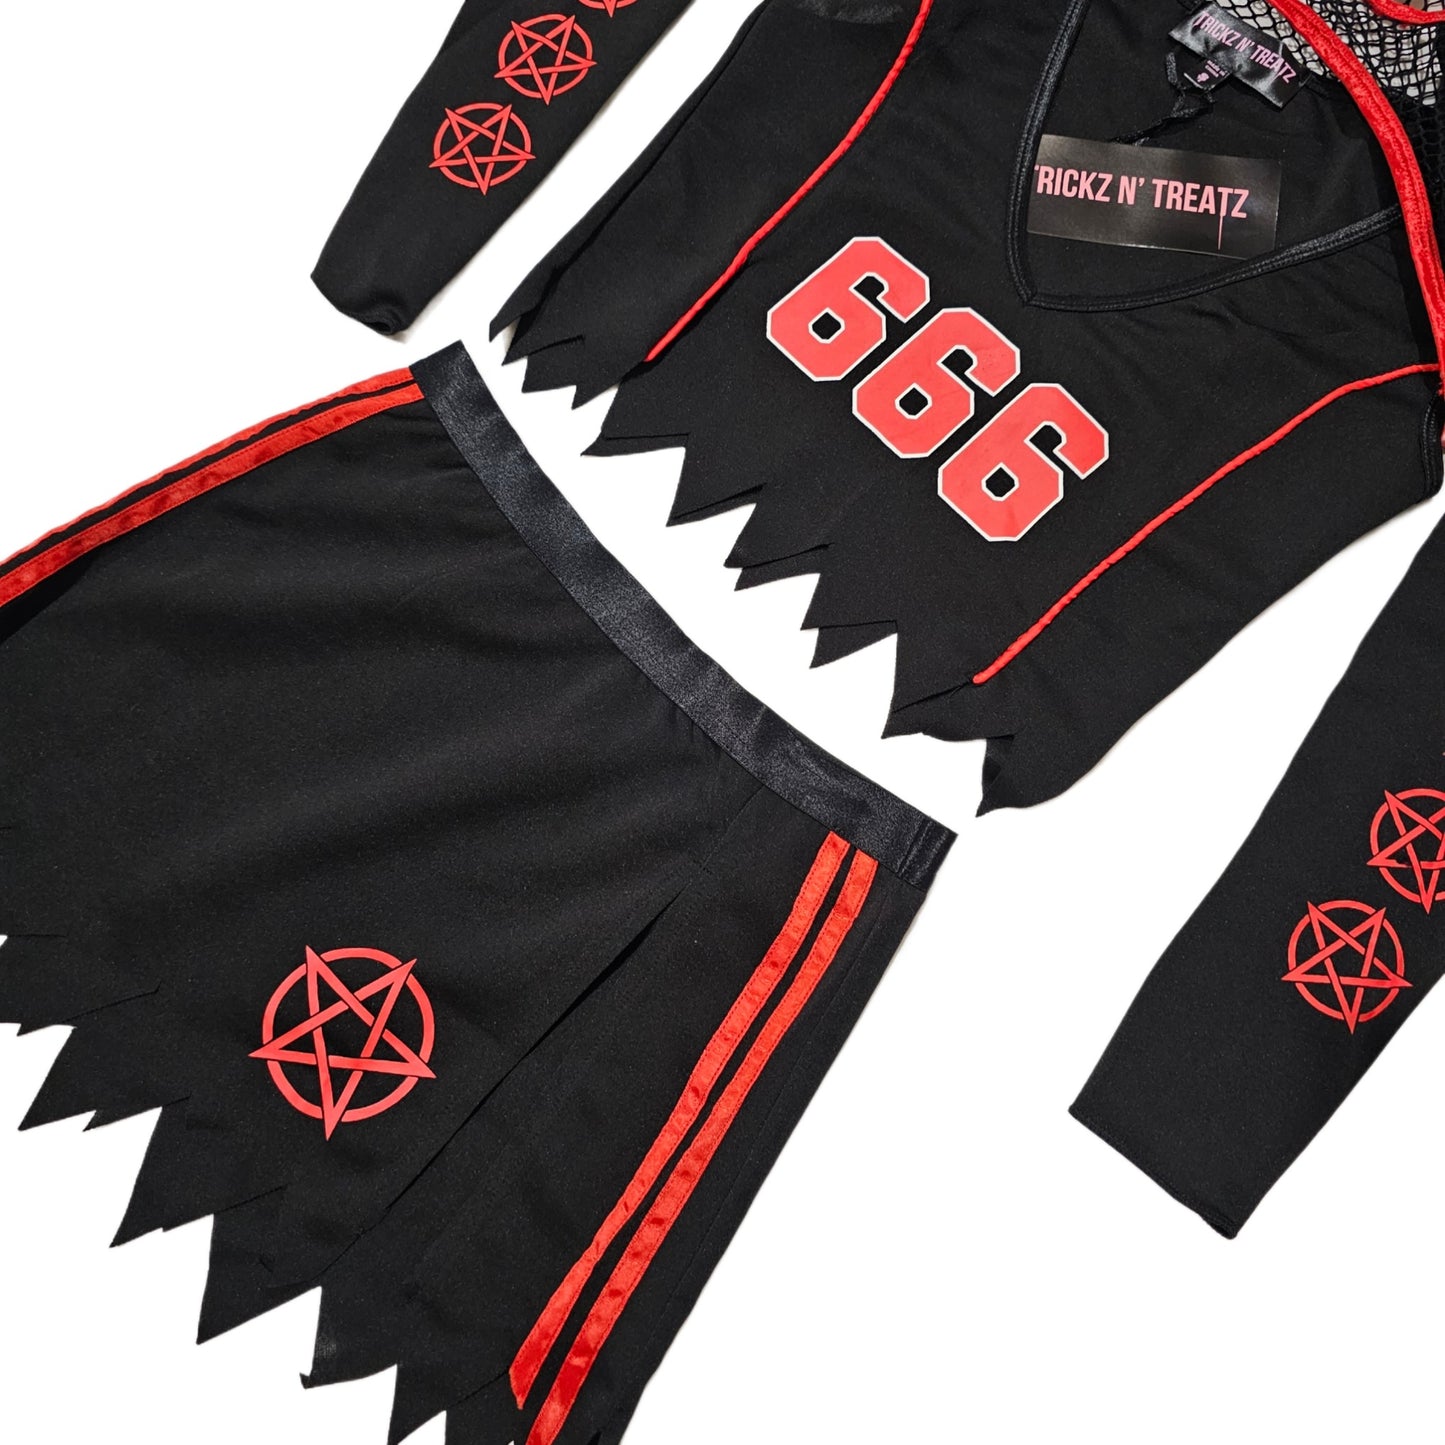 Football Costume Set | Go Devils | Red & Black Pentagram & 666 Graphic - Trickz N Treatz - Costumes